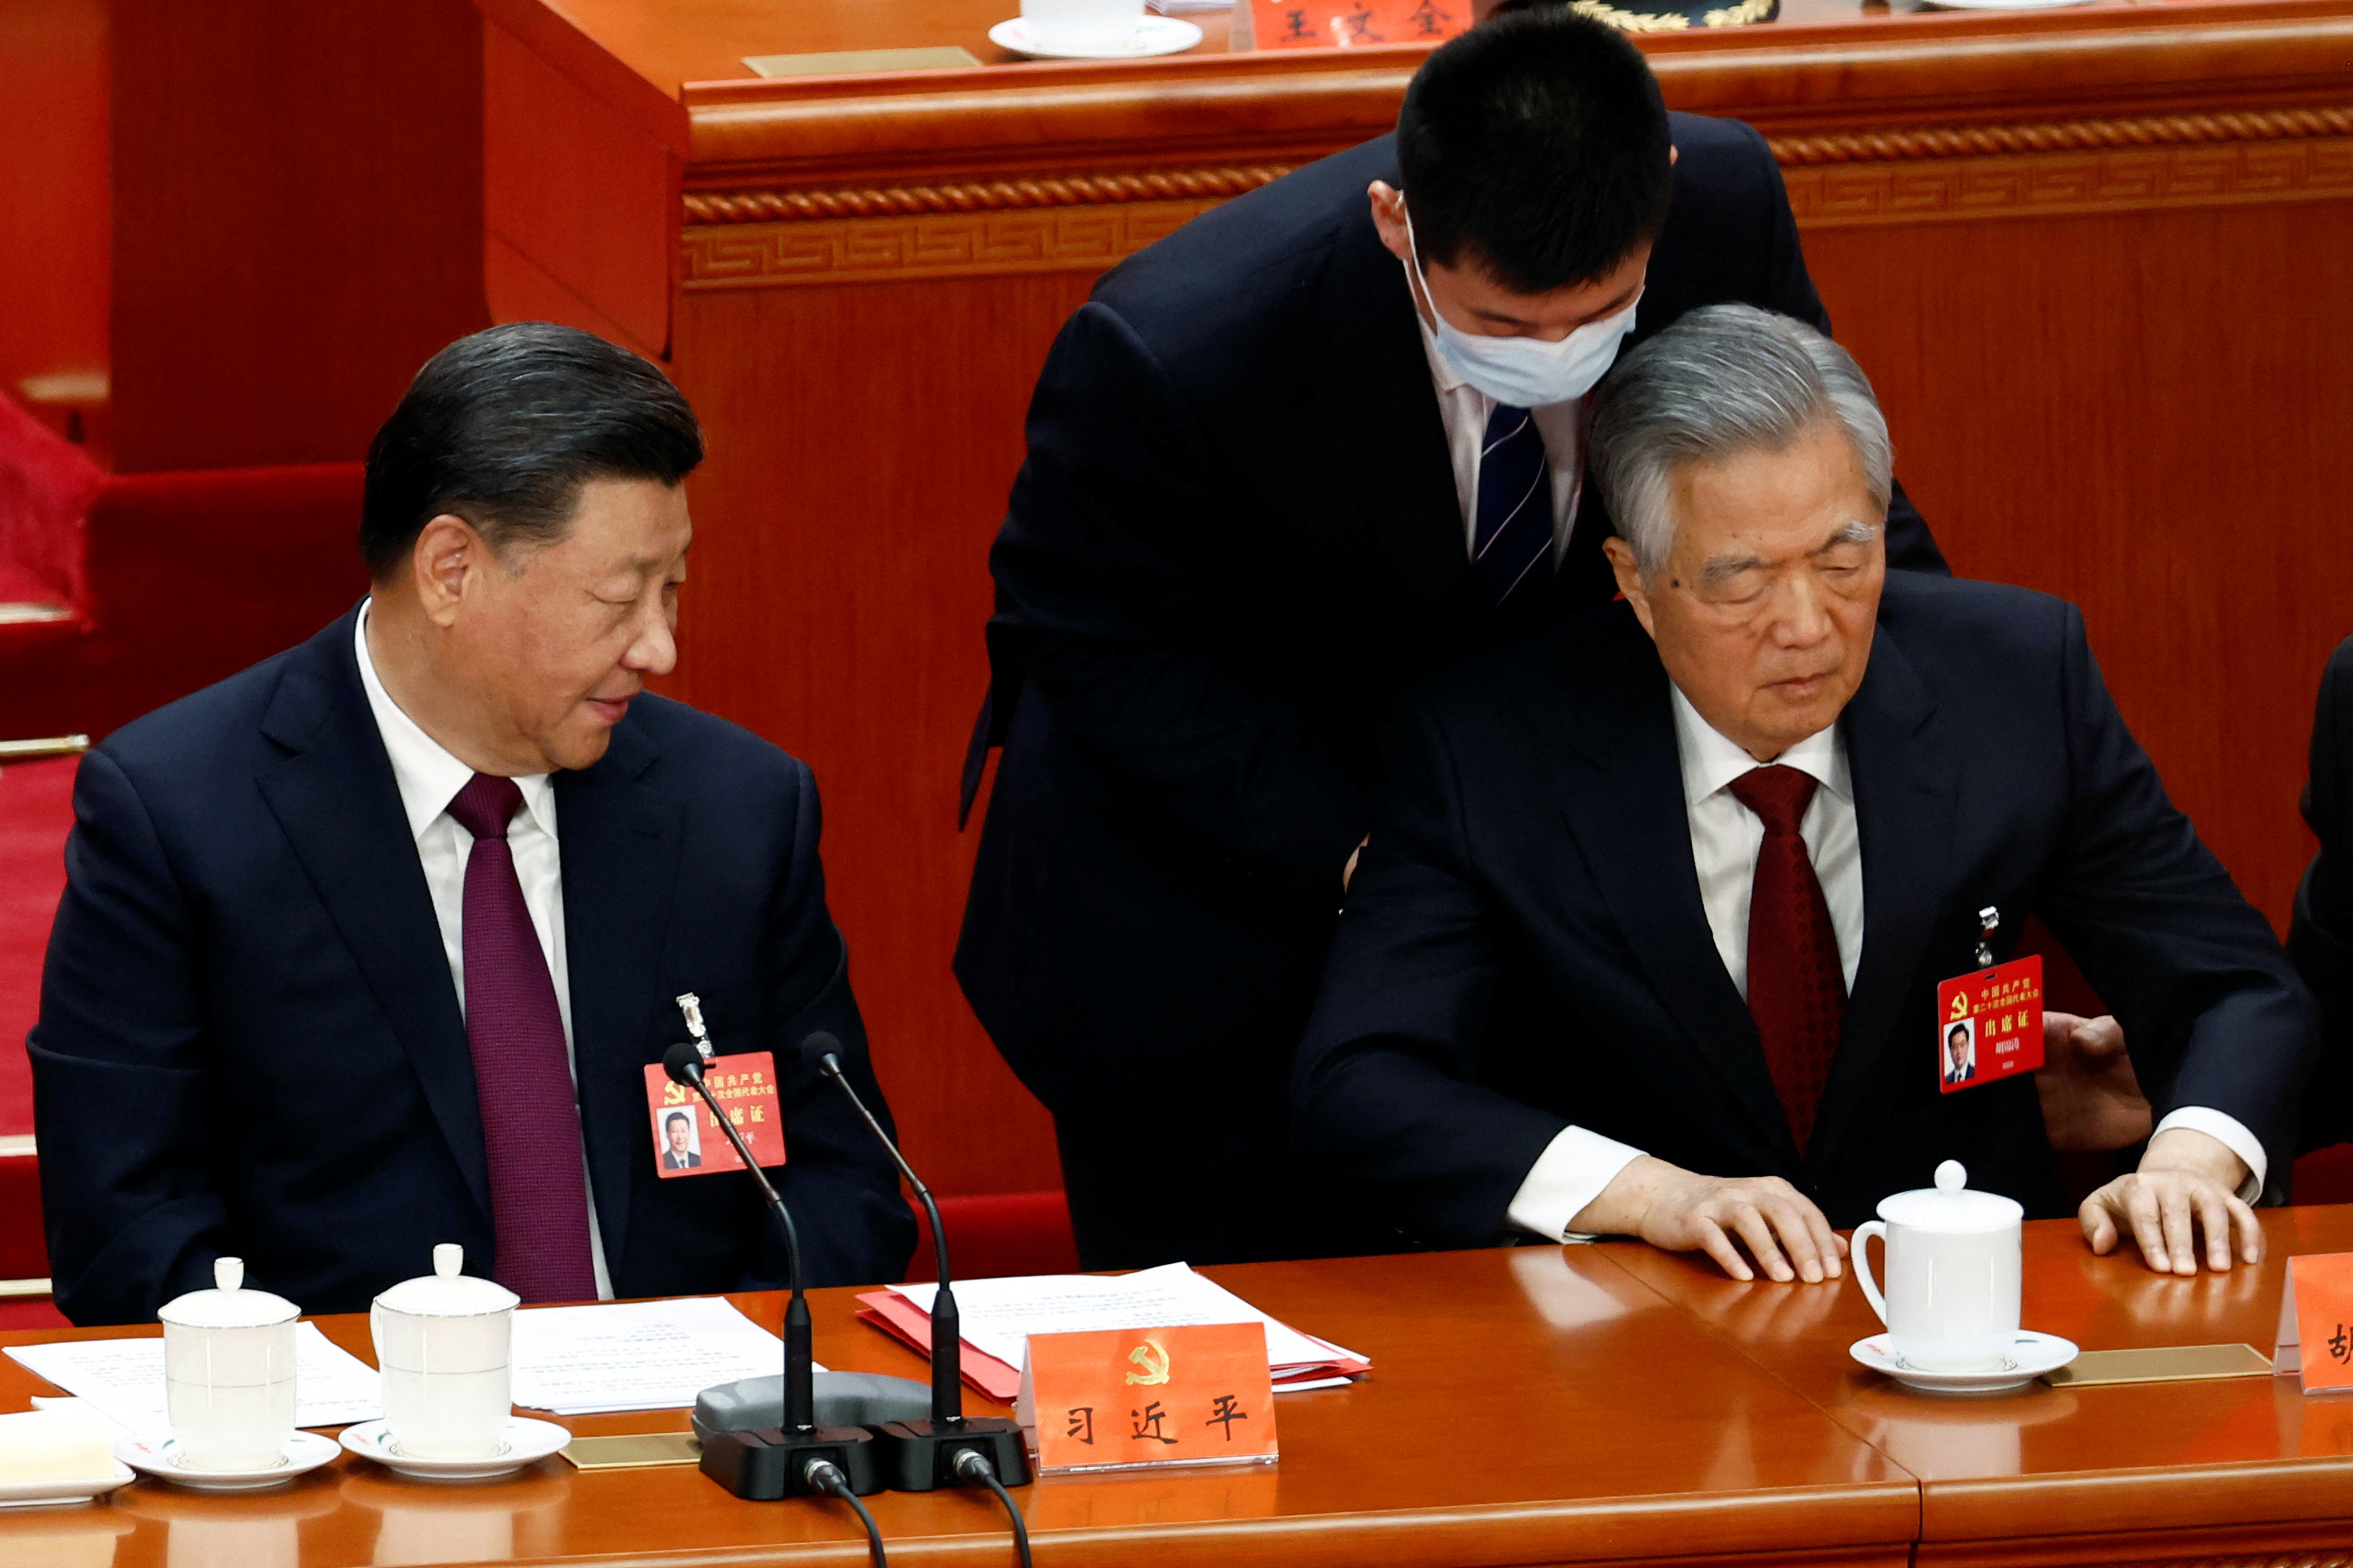 El momento en que Hu Jintao, antecesor de Xi Jinping, es forzado a retiarse del Congreso del Partido Comunista, que consagró un "inédito" tercer mandato de Xi
REUTERS/Tingshu Wang